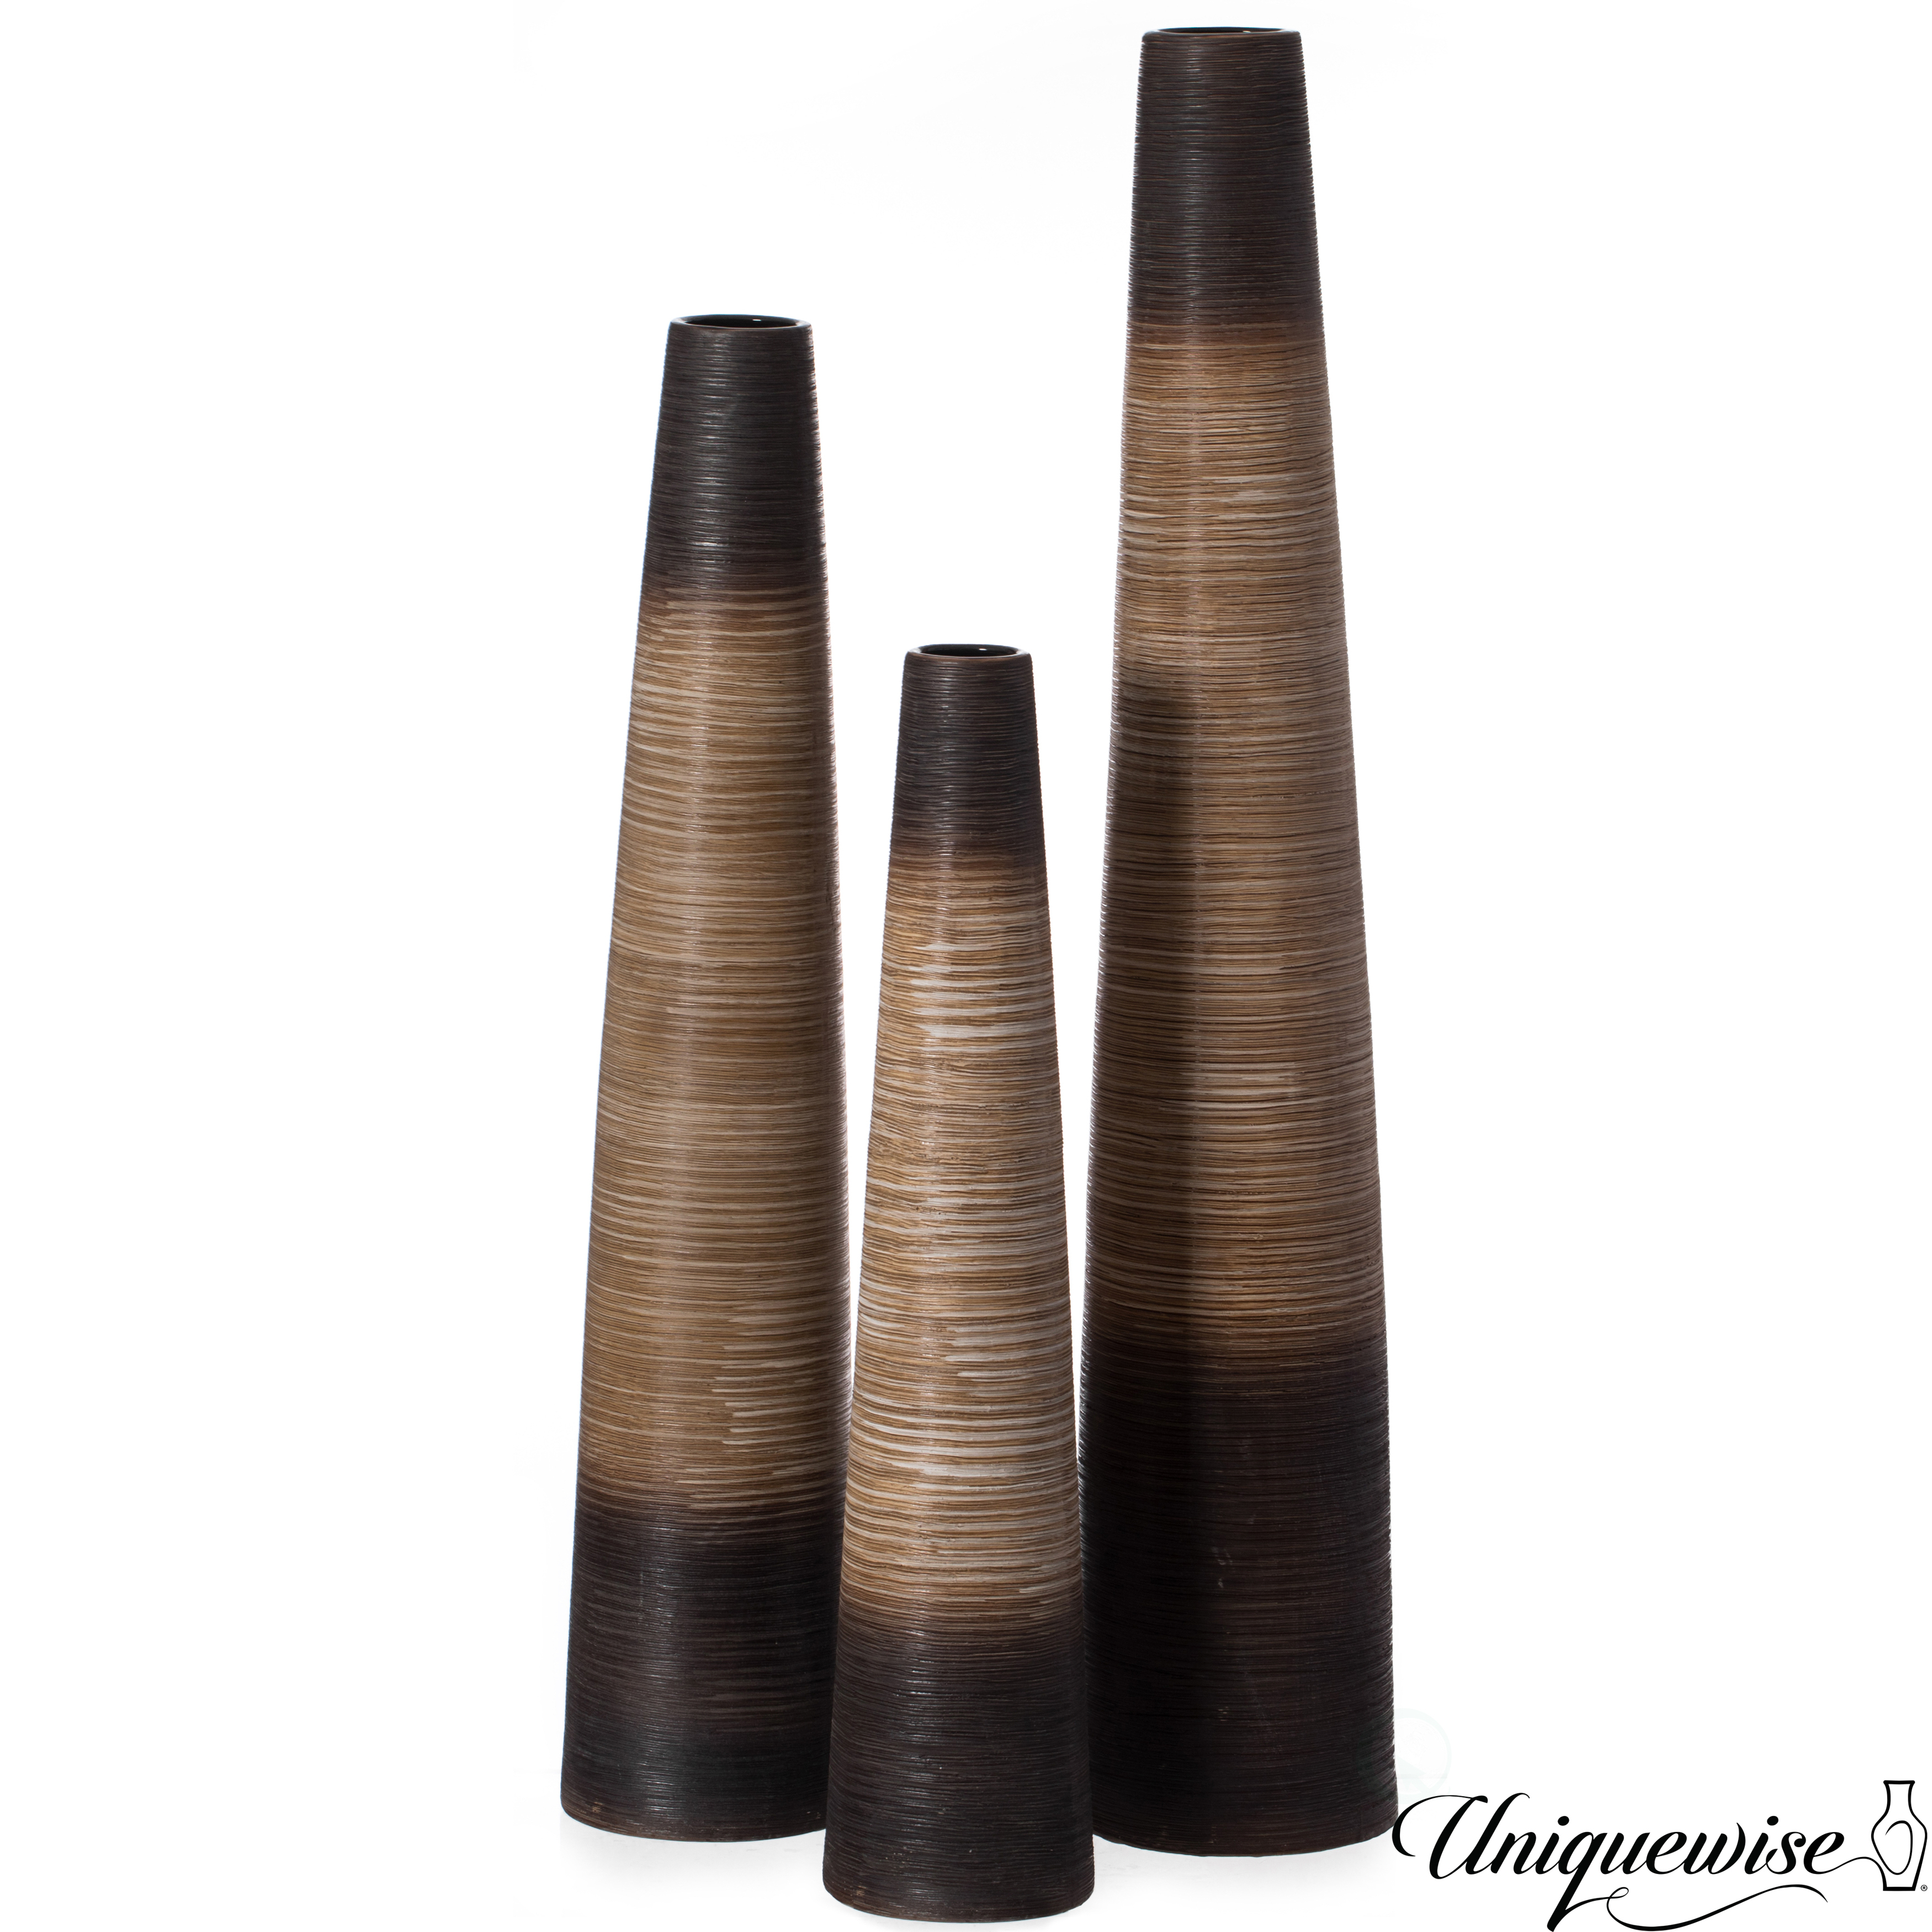 Tall Handcrafted Brown Ceramic Floor Vase - Waterproof Cylinder-Shaped Freestanding Design, Ideal For Tall Floral Arrangements - Set Of 3